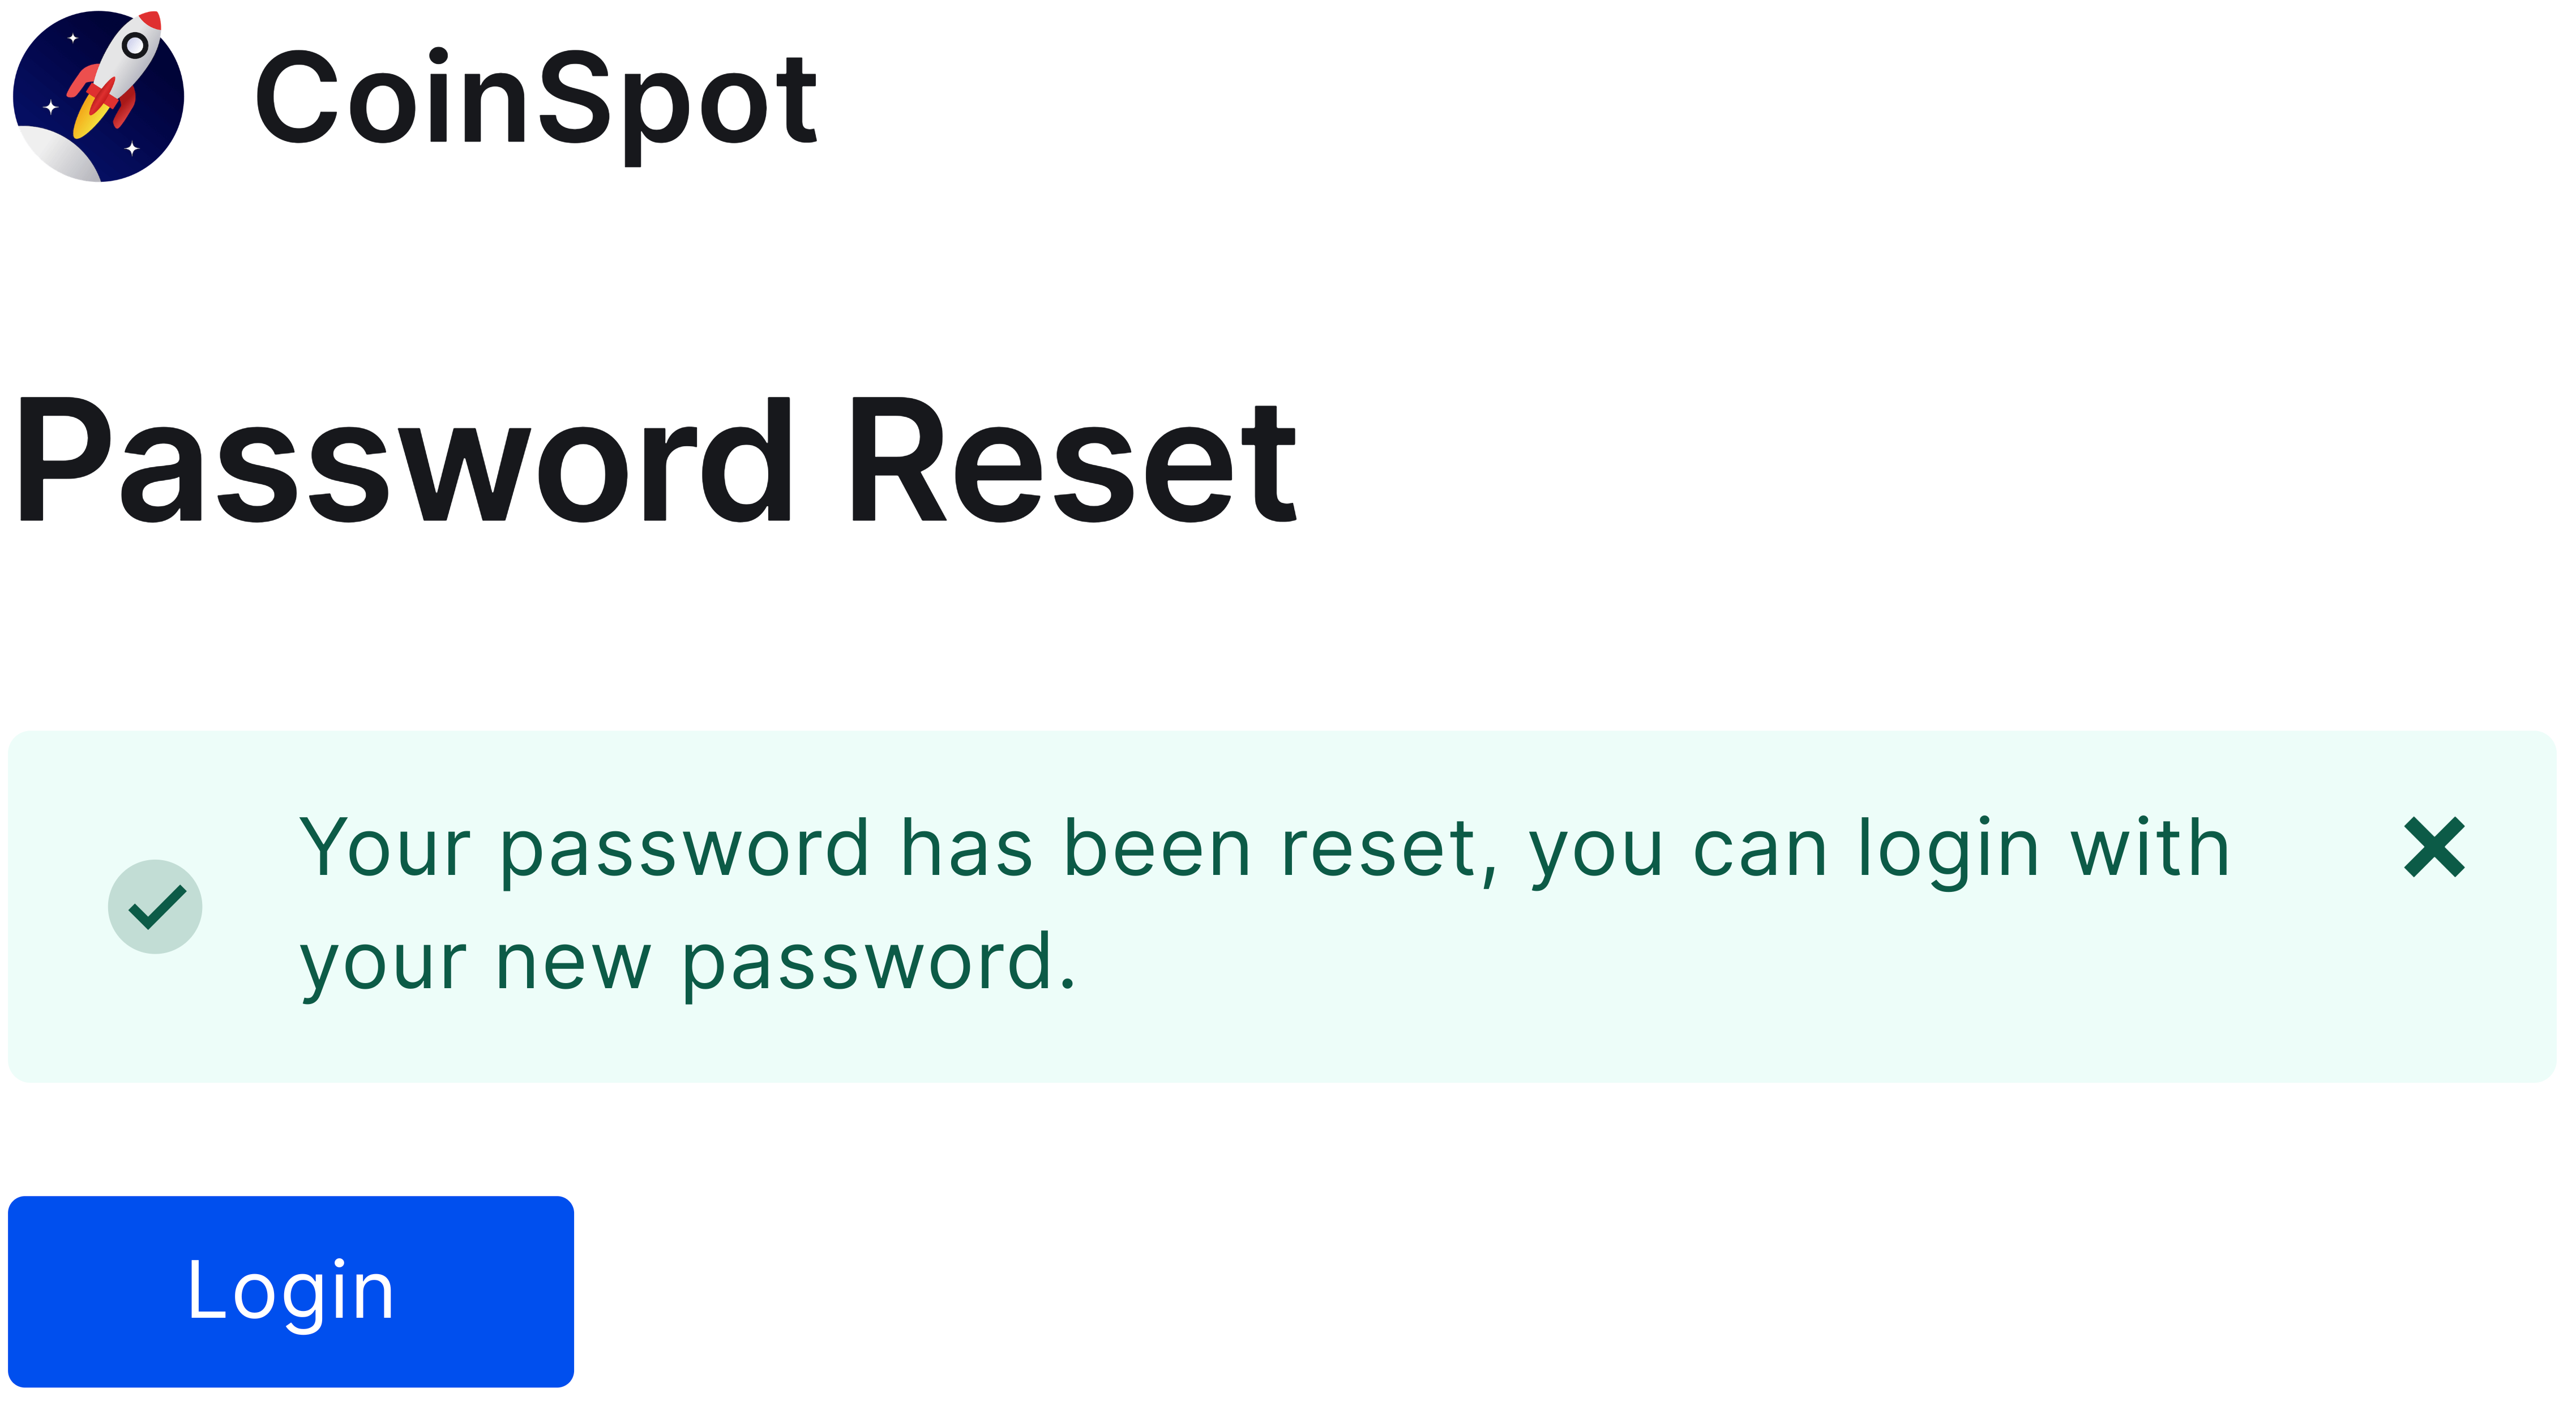 Password_Reset_Successful.png